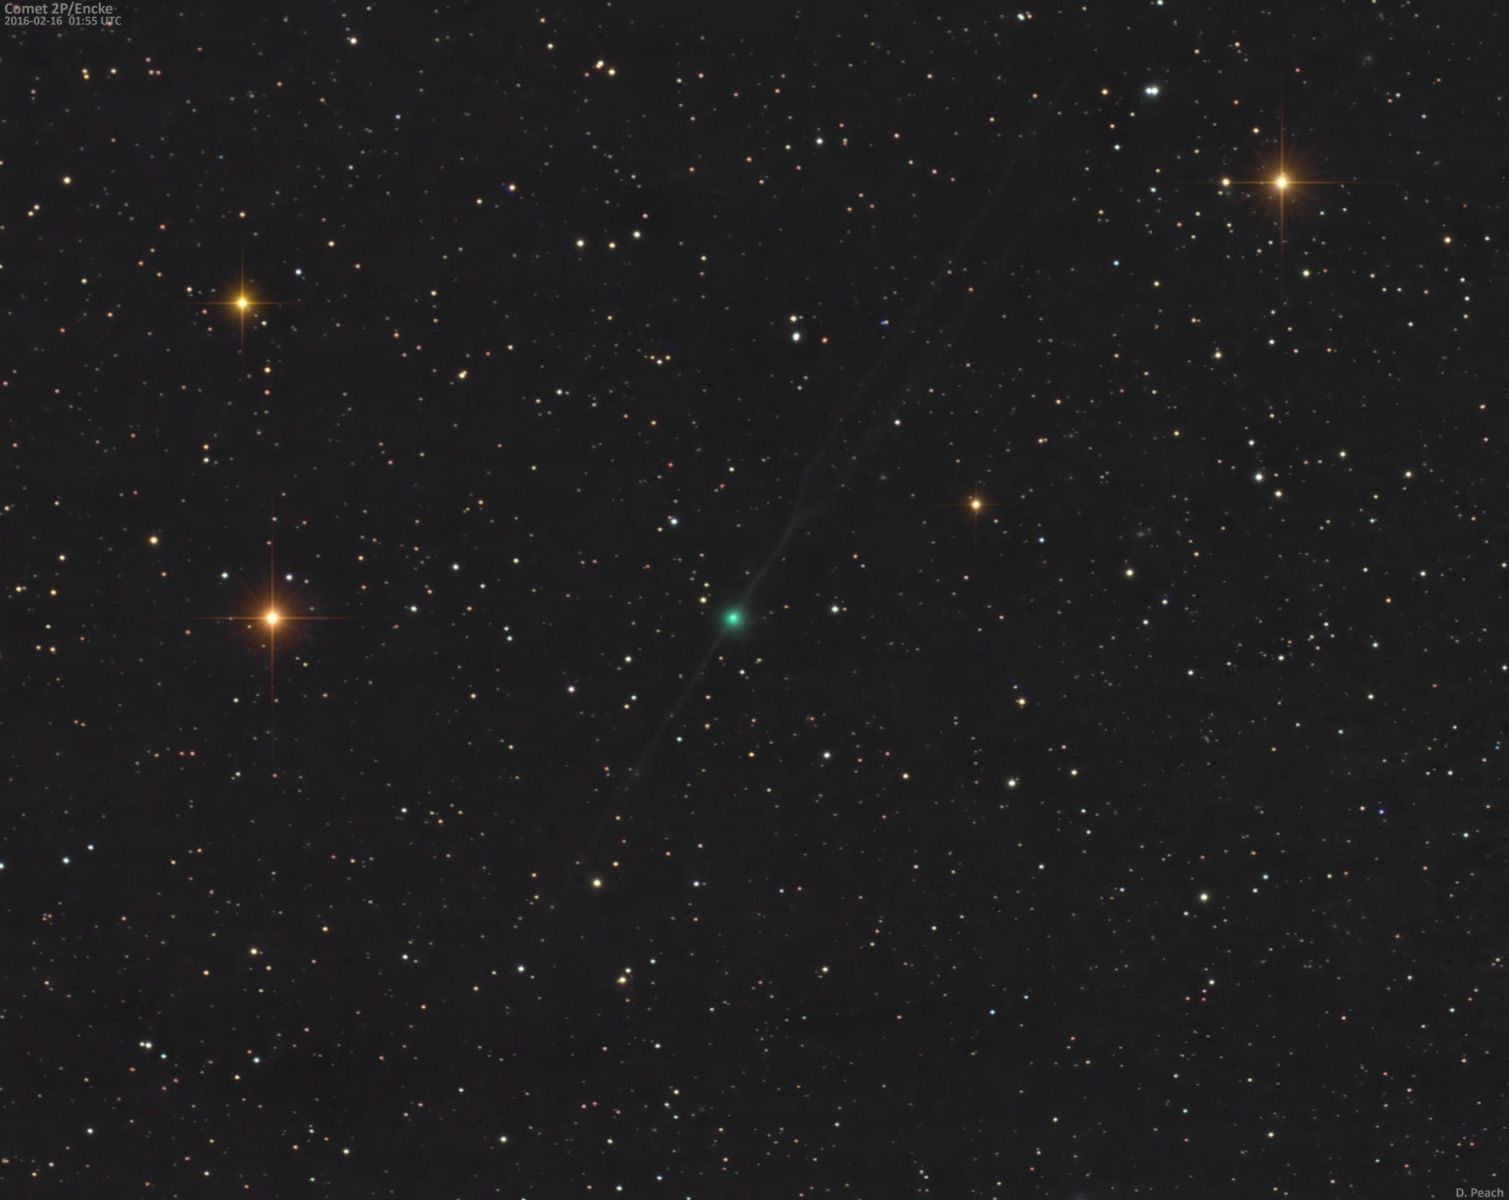 Comet 2P/Encke on February 16, 2017 by Damian Peach